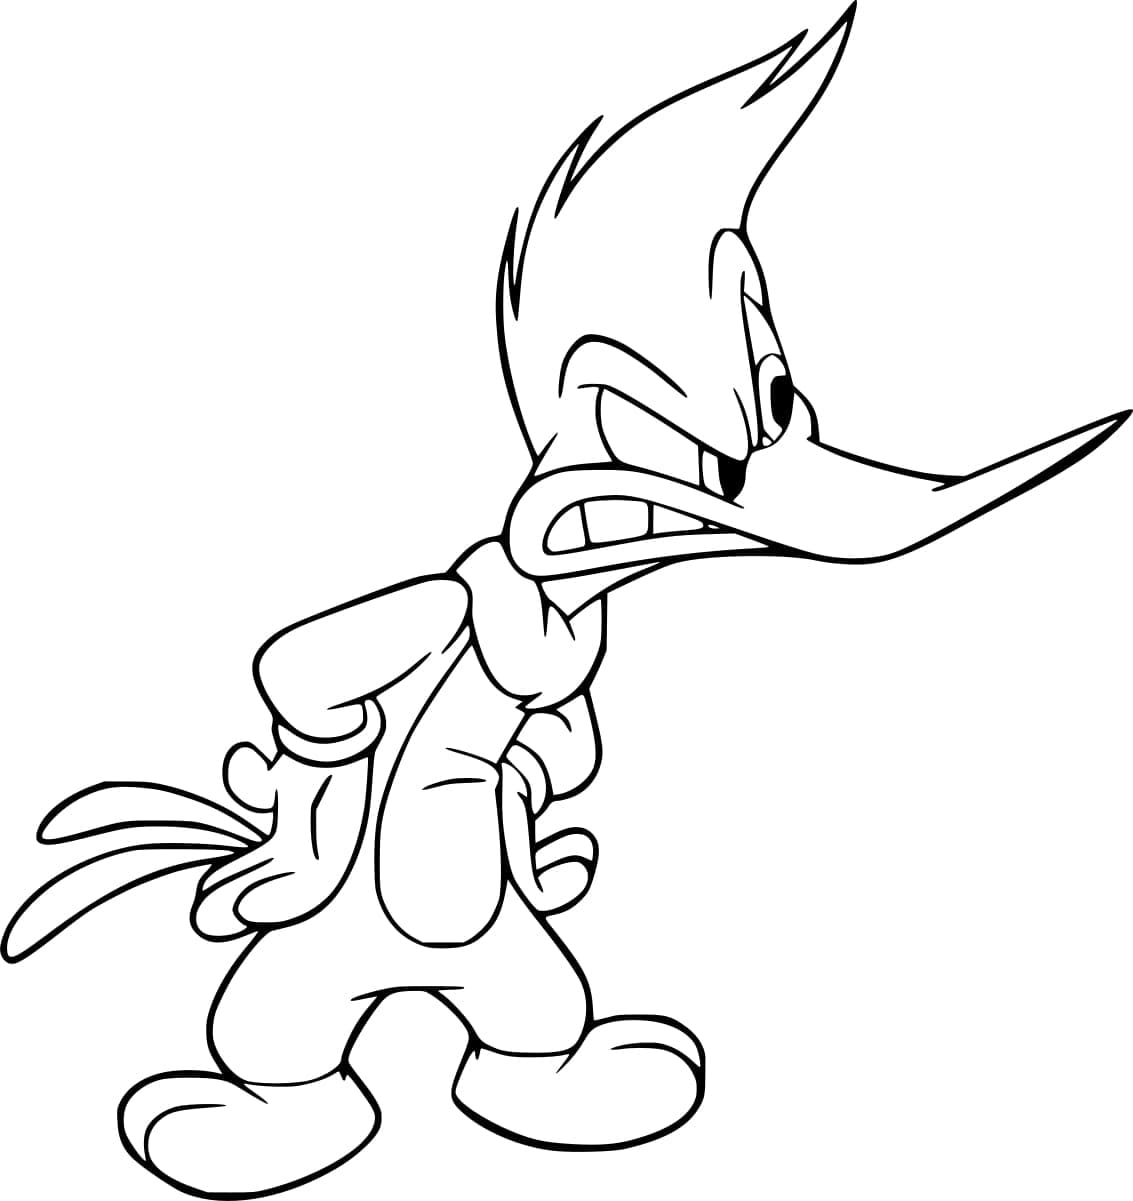 Woody Woodpecker en Colère coloring page